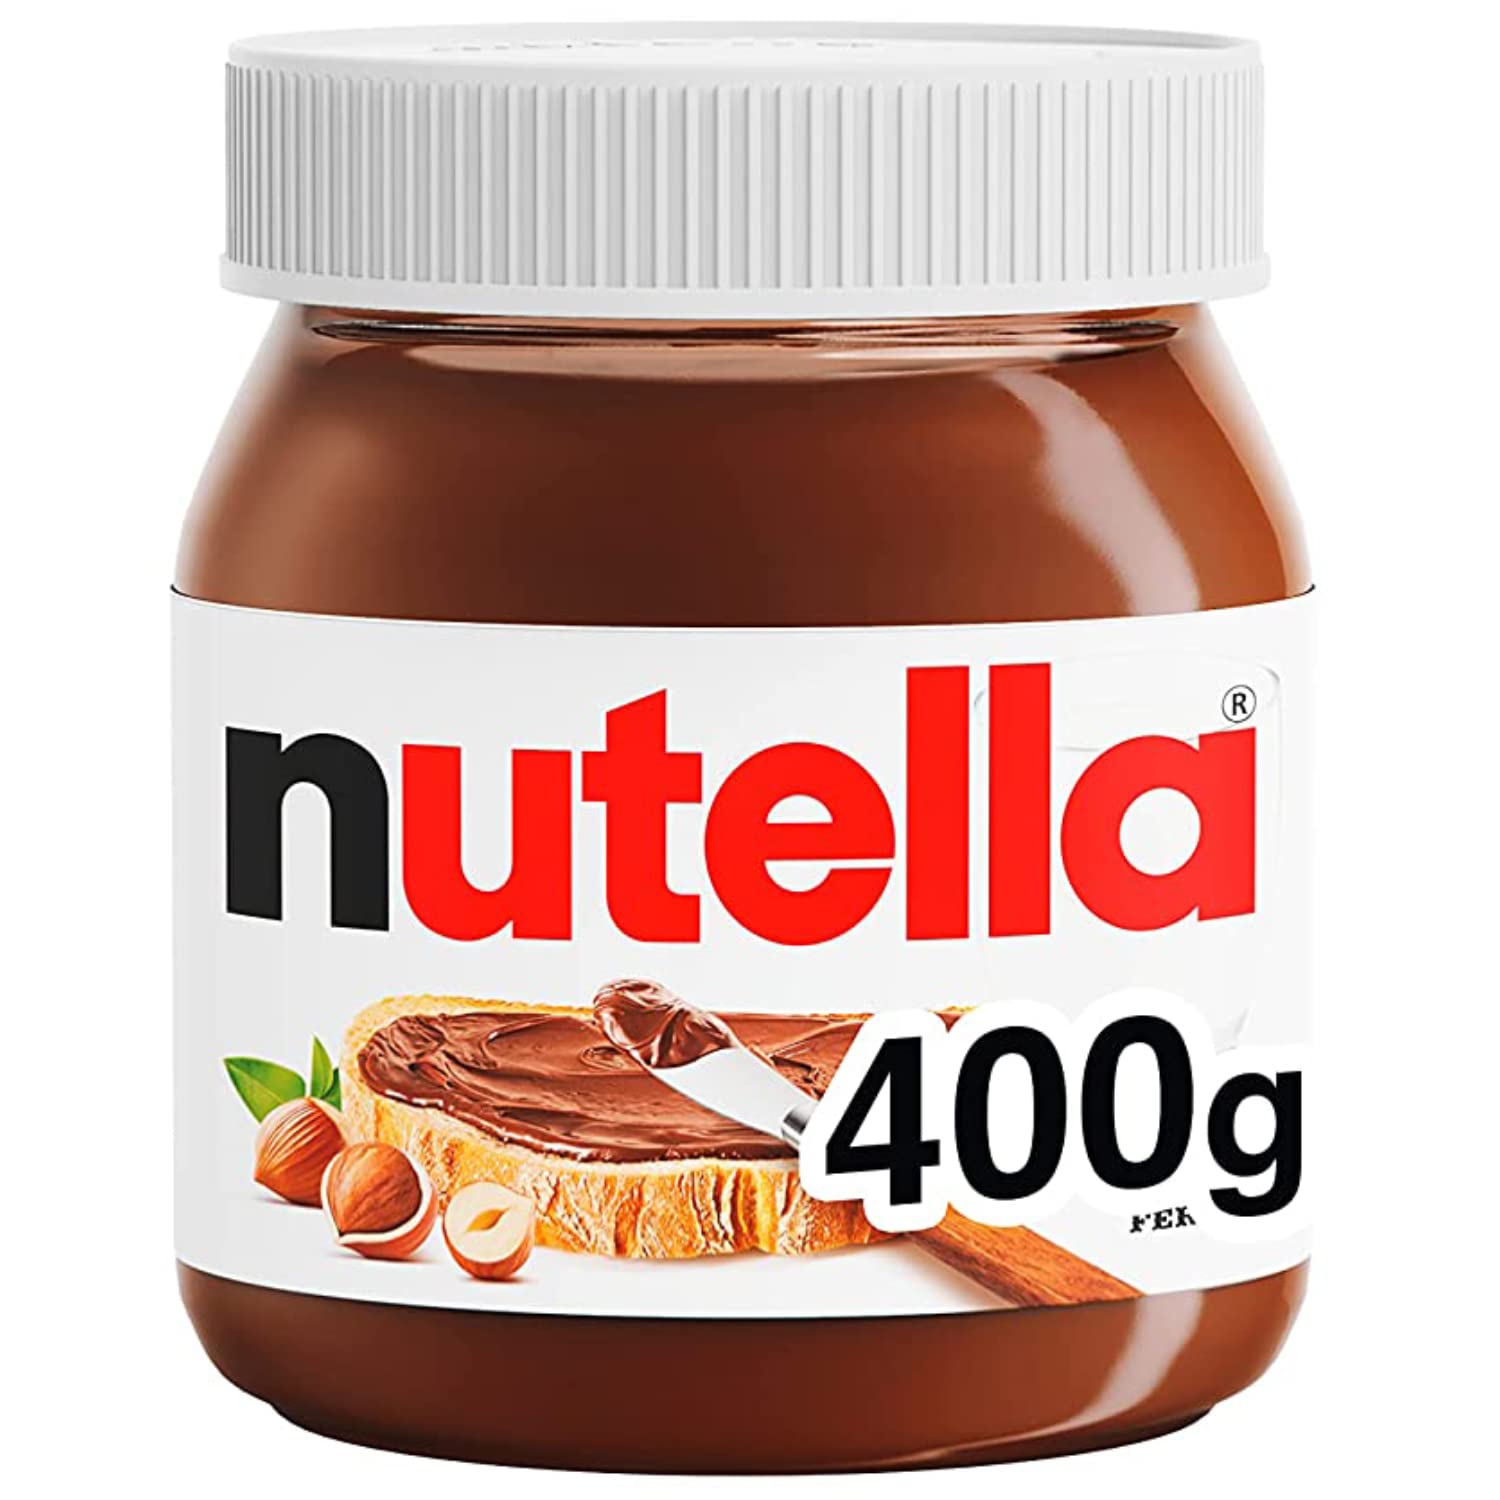 Nutella for substitutes